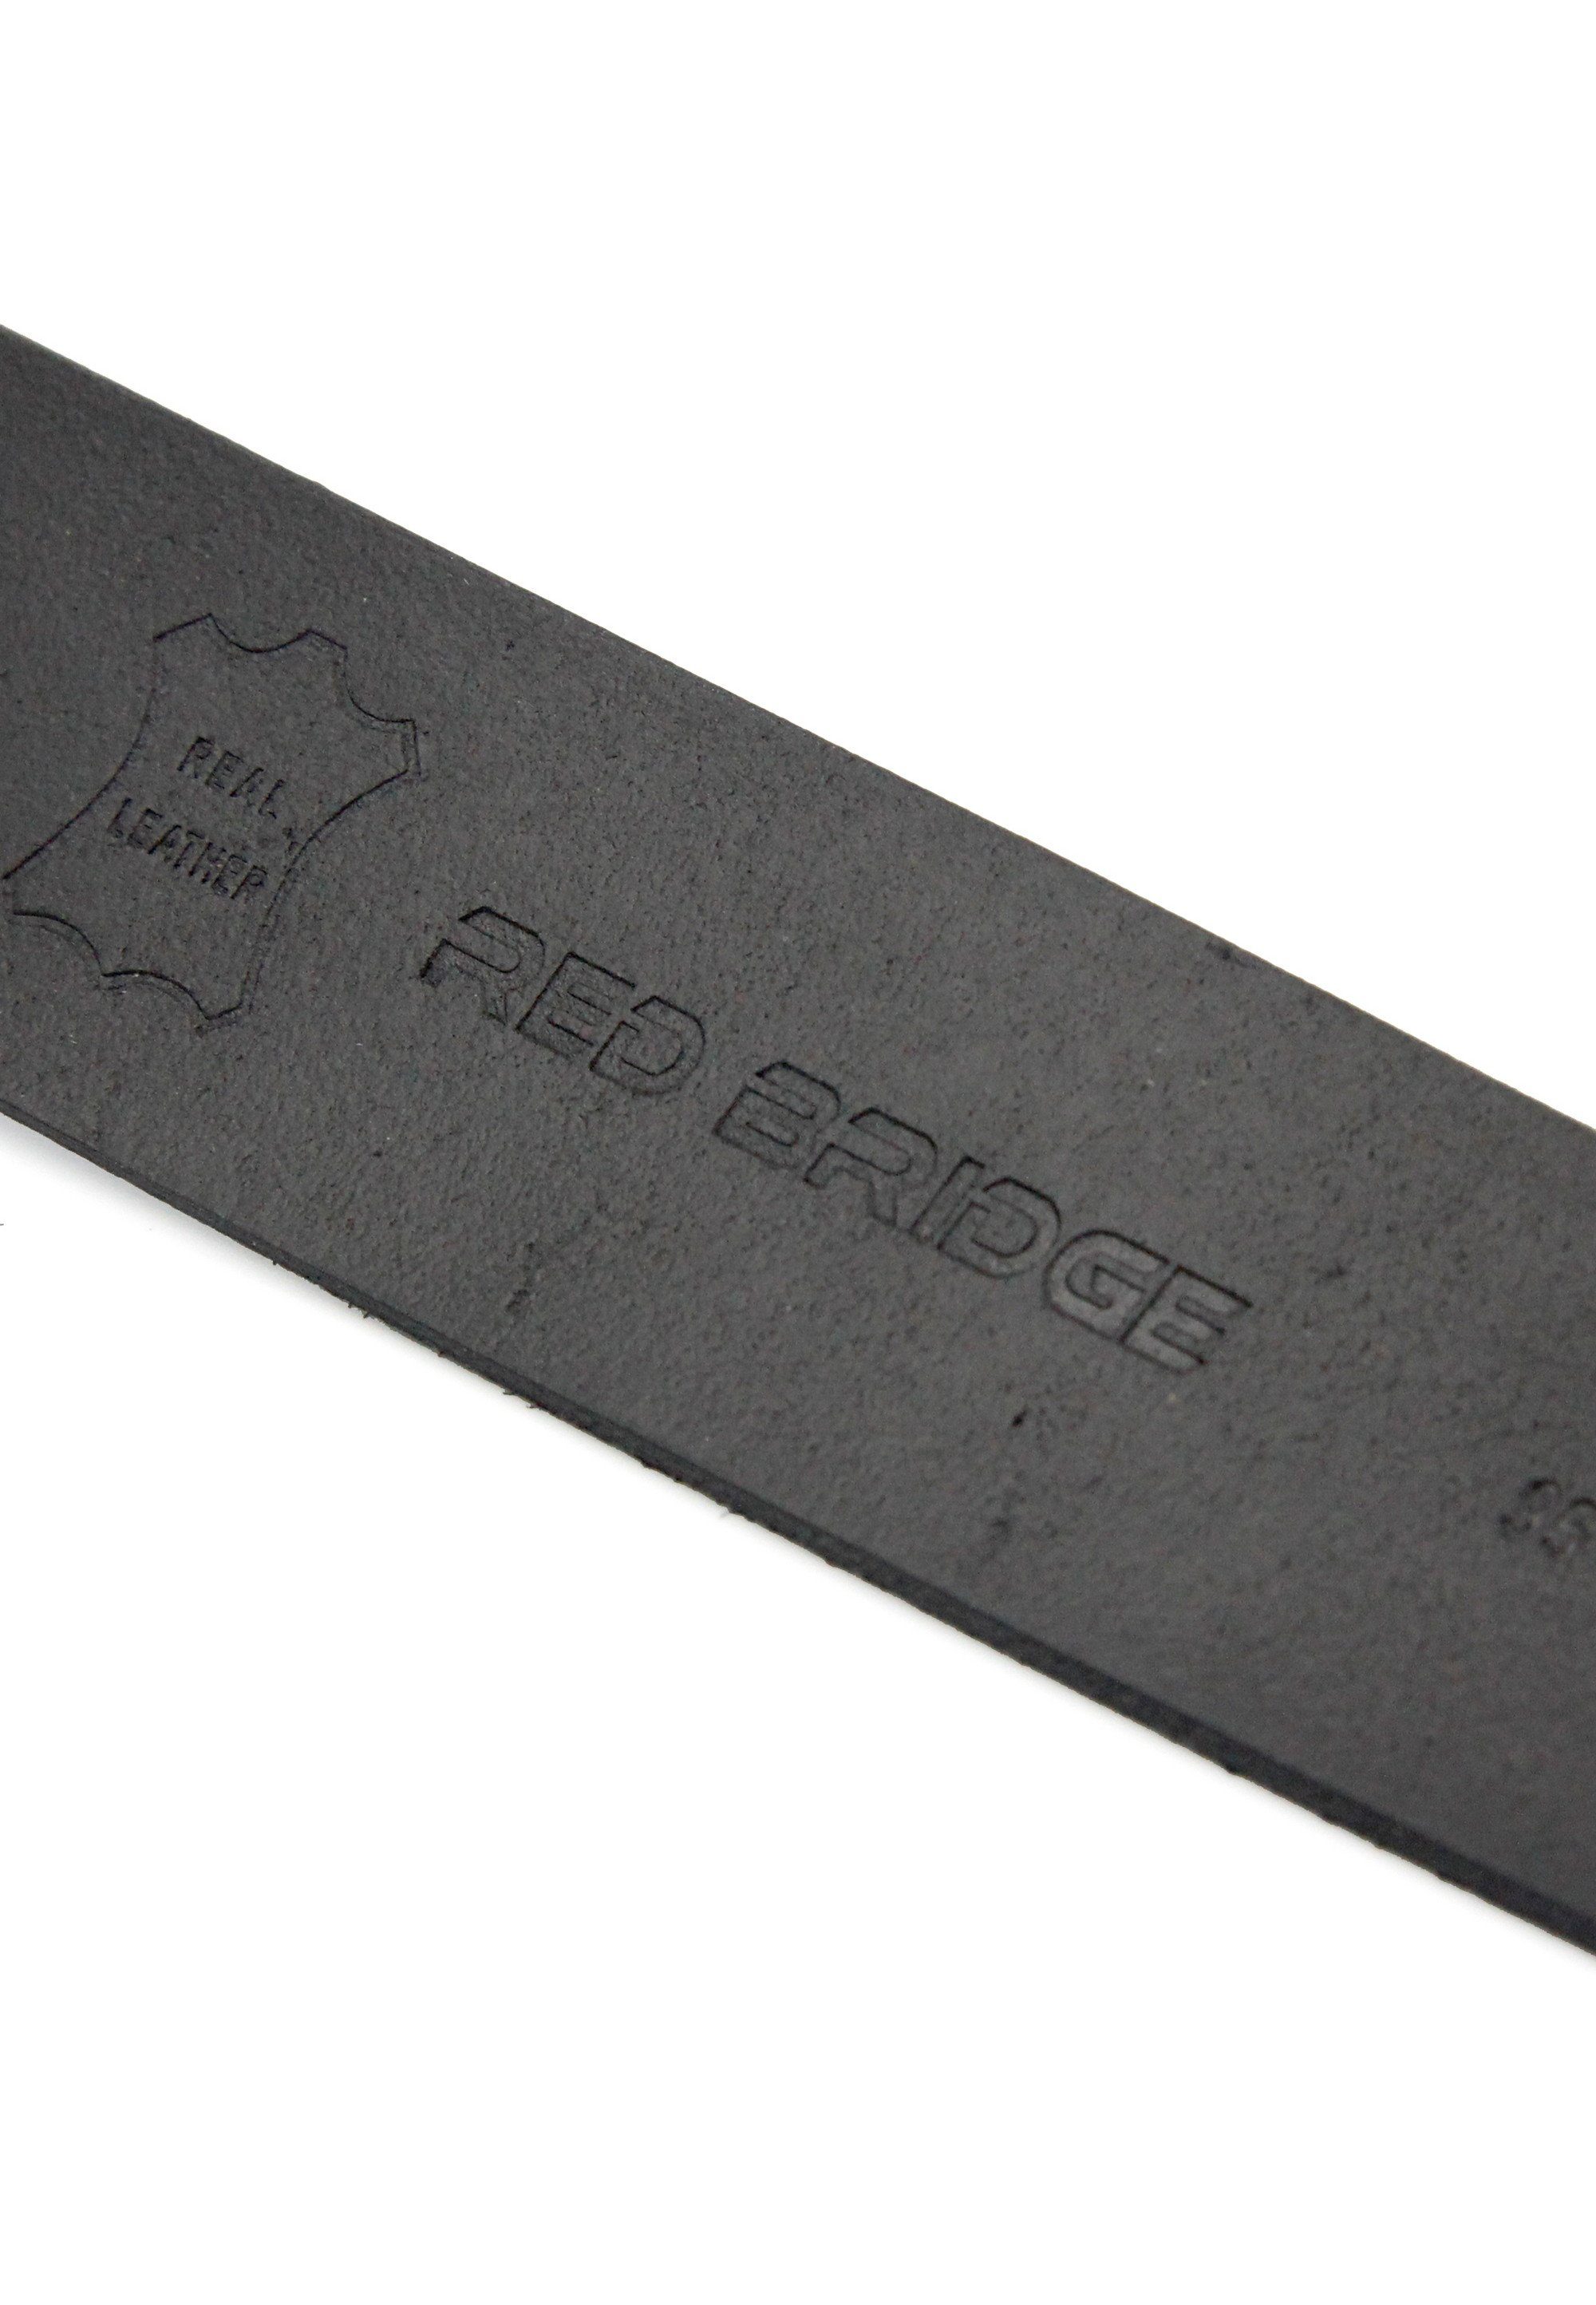 RedBridge Ledergürtel Design Frisco schlichtem schwarz in